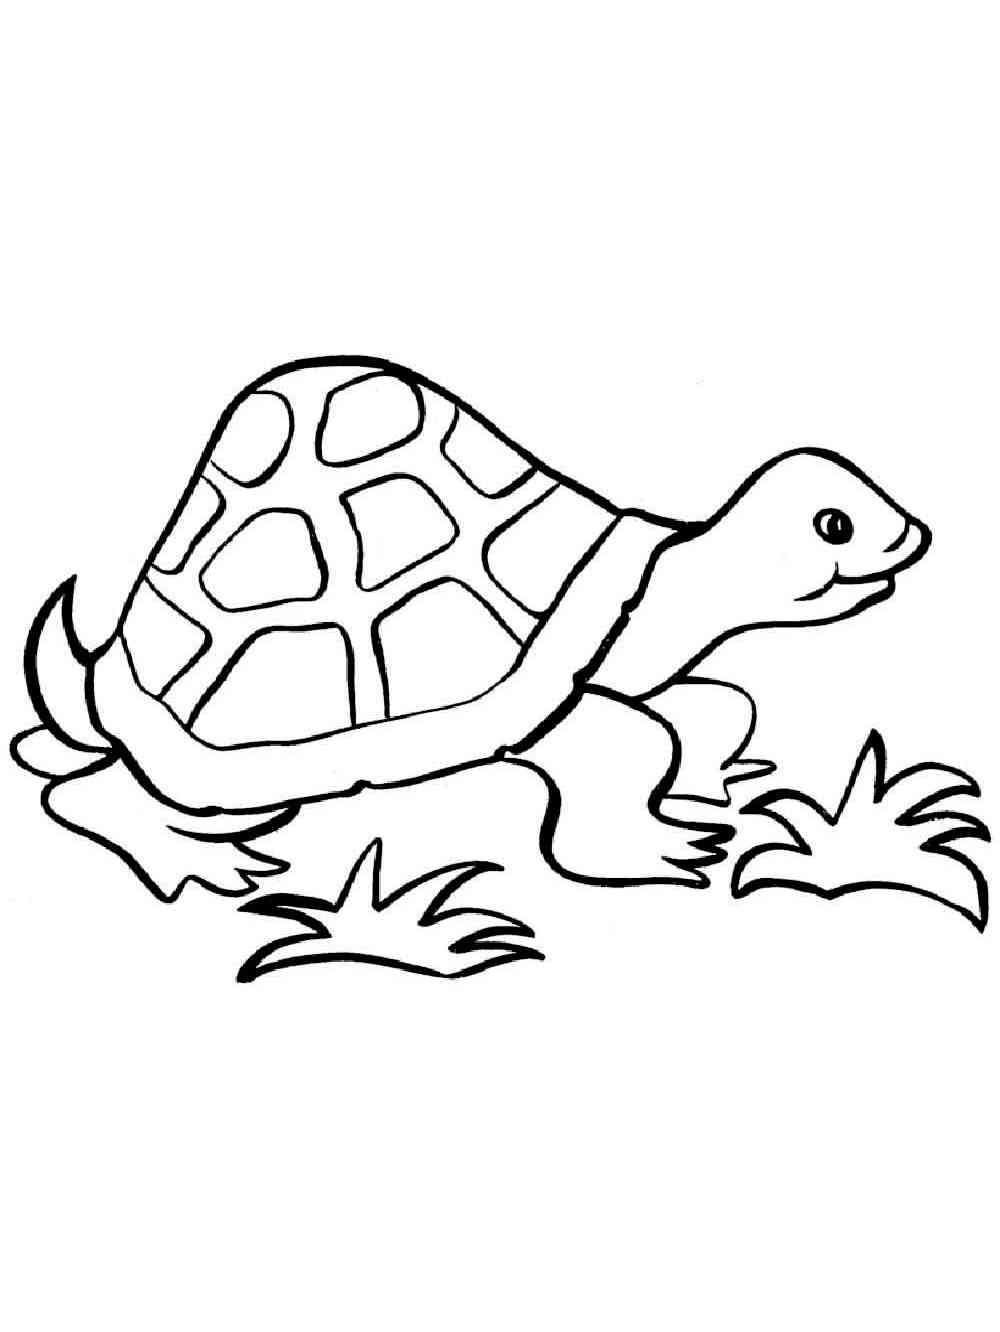 Walking Turtle coloring page